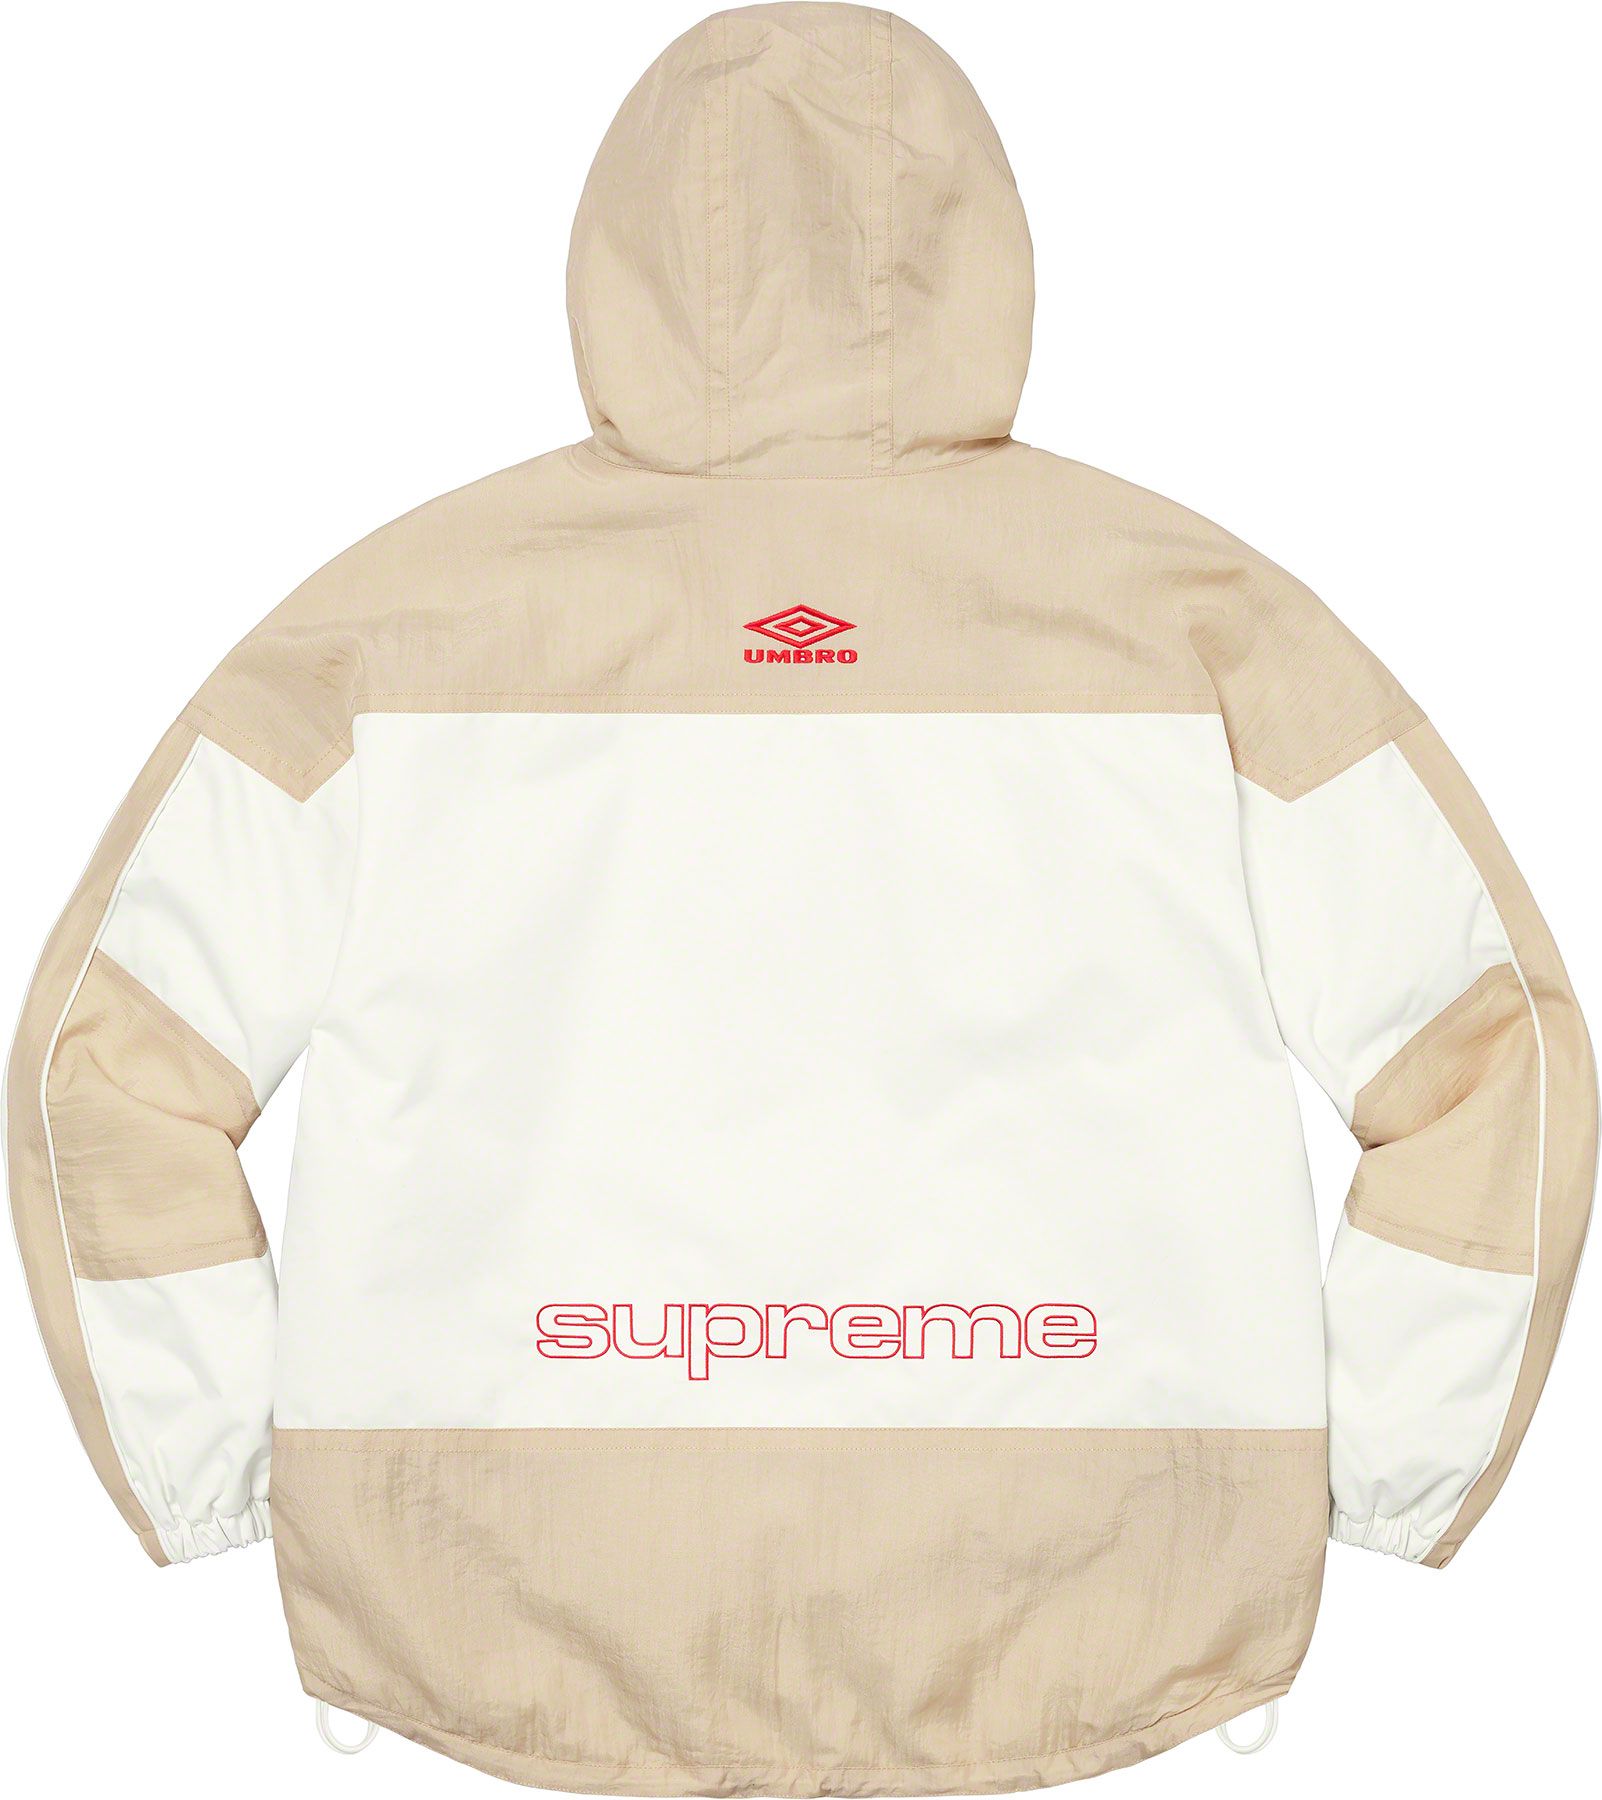 Supreme®/Umbro Hooded Anorak – Supreme